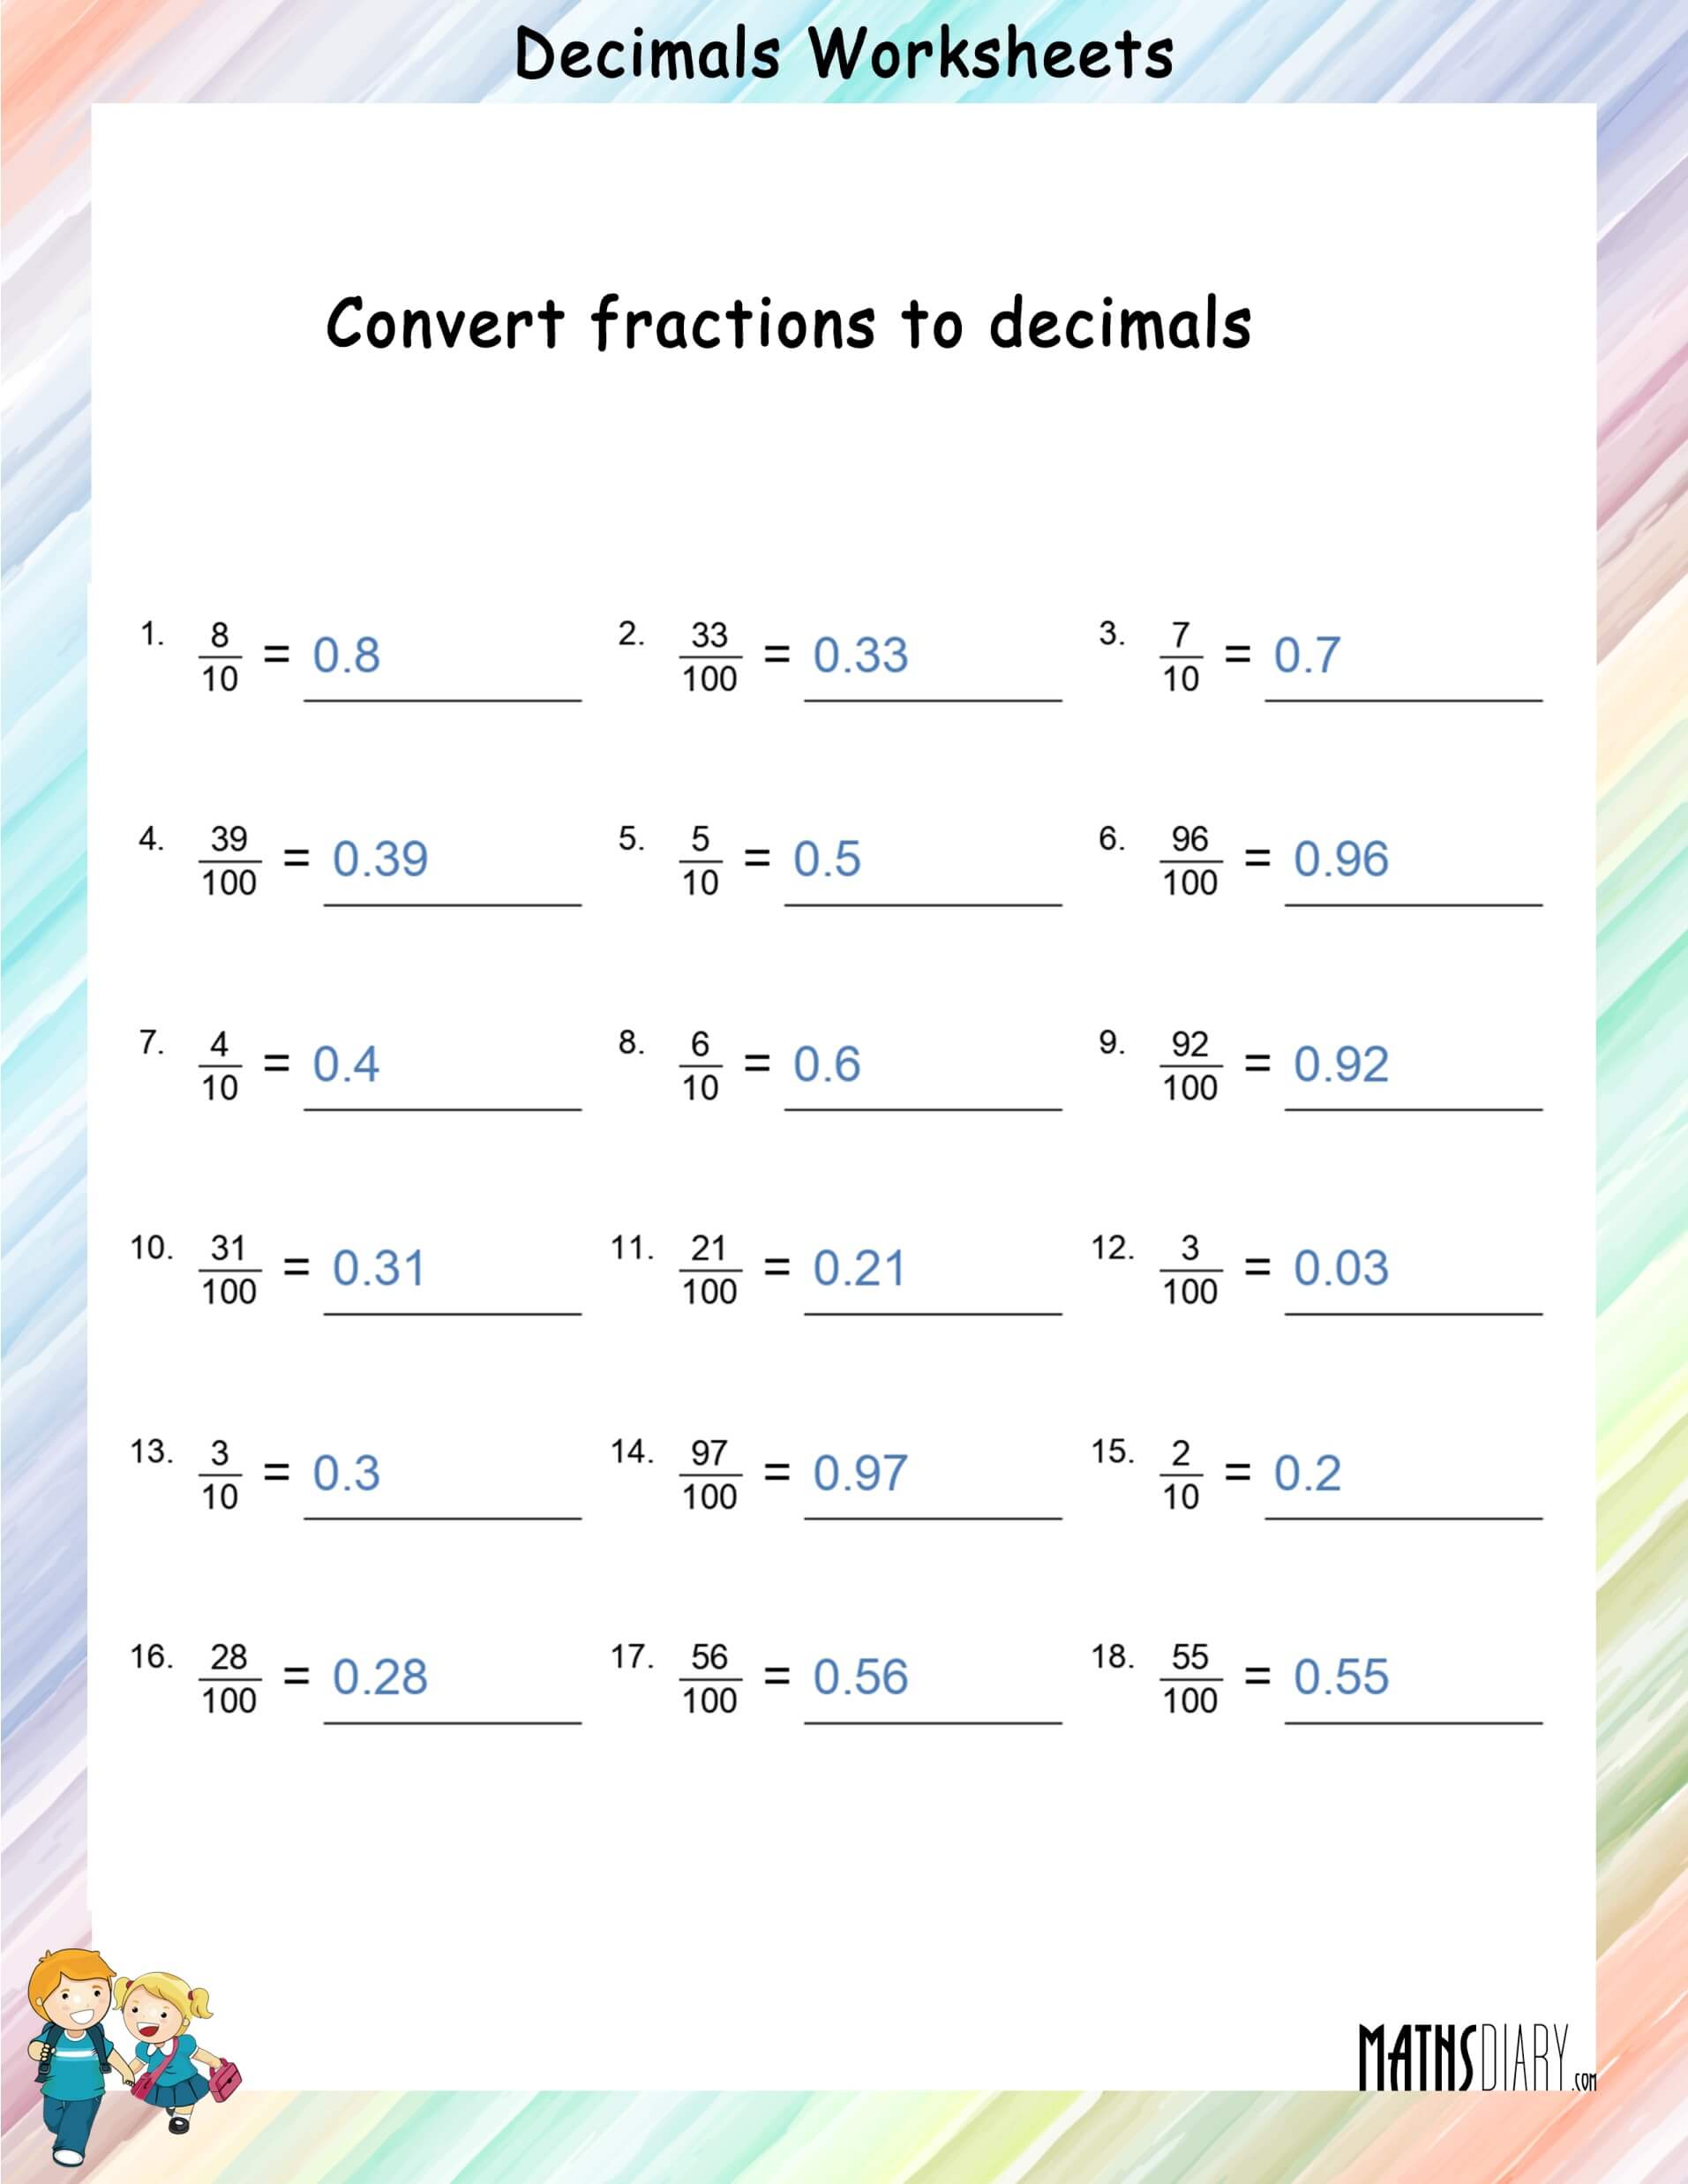 converting fractions to decimals problem solving